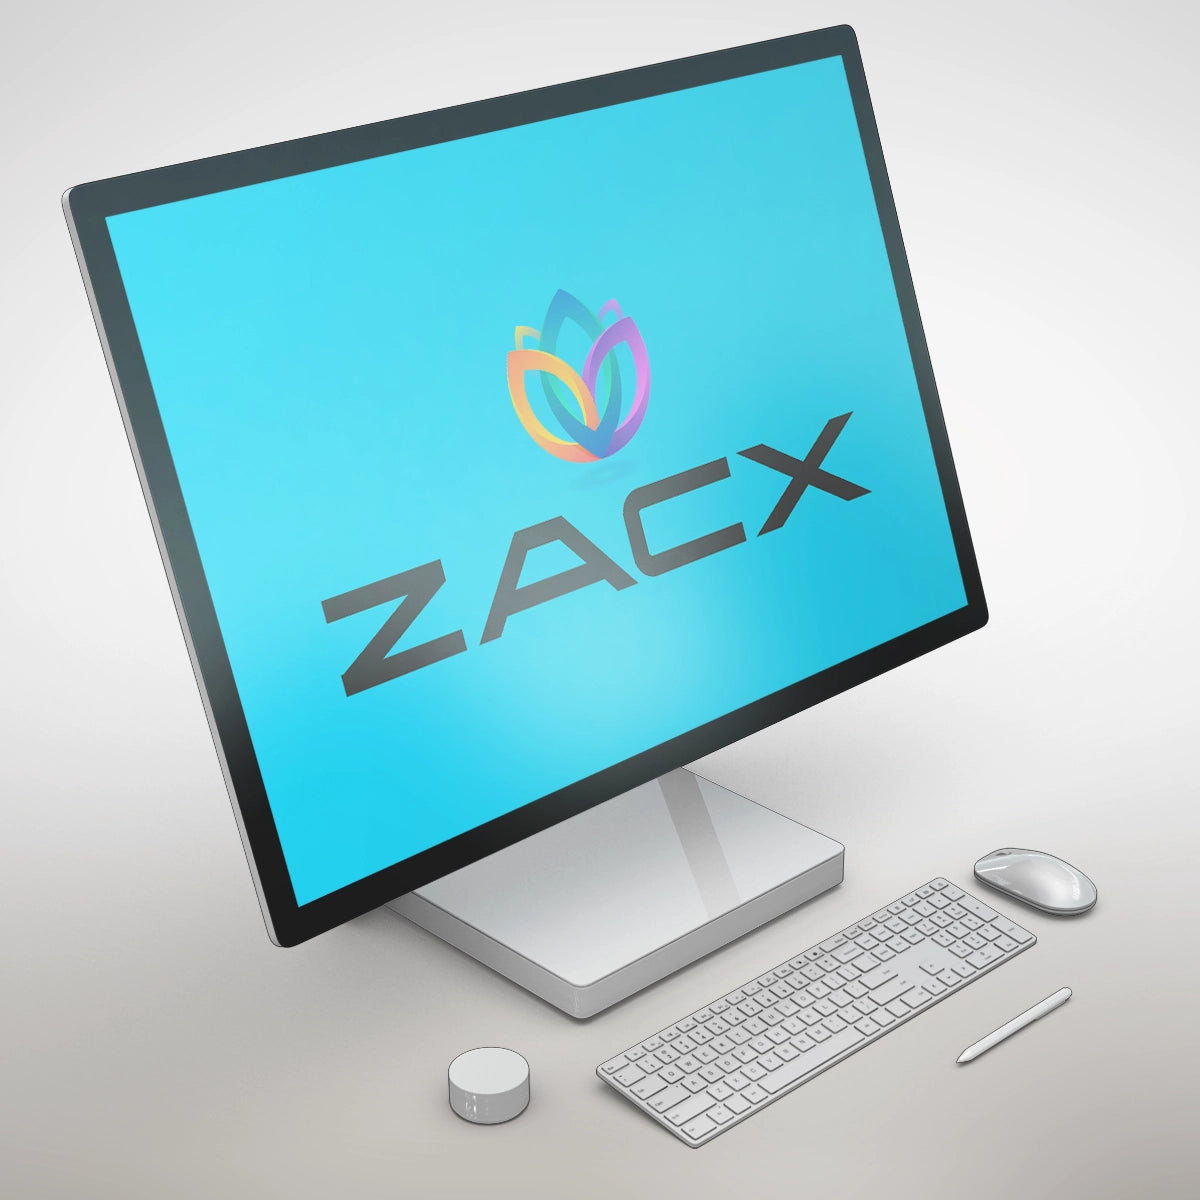 zacx.com